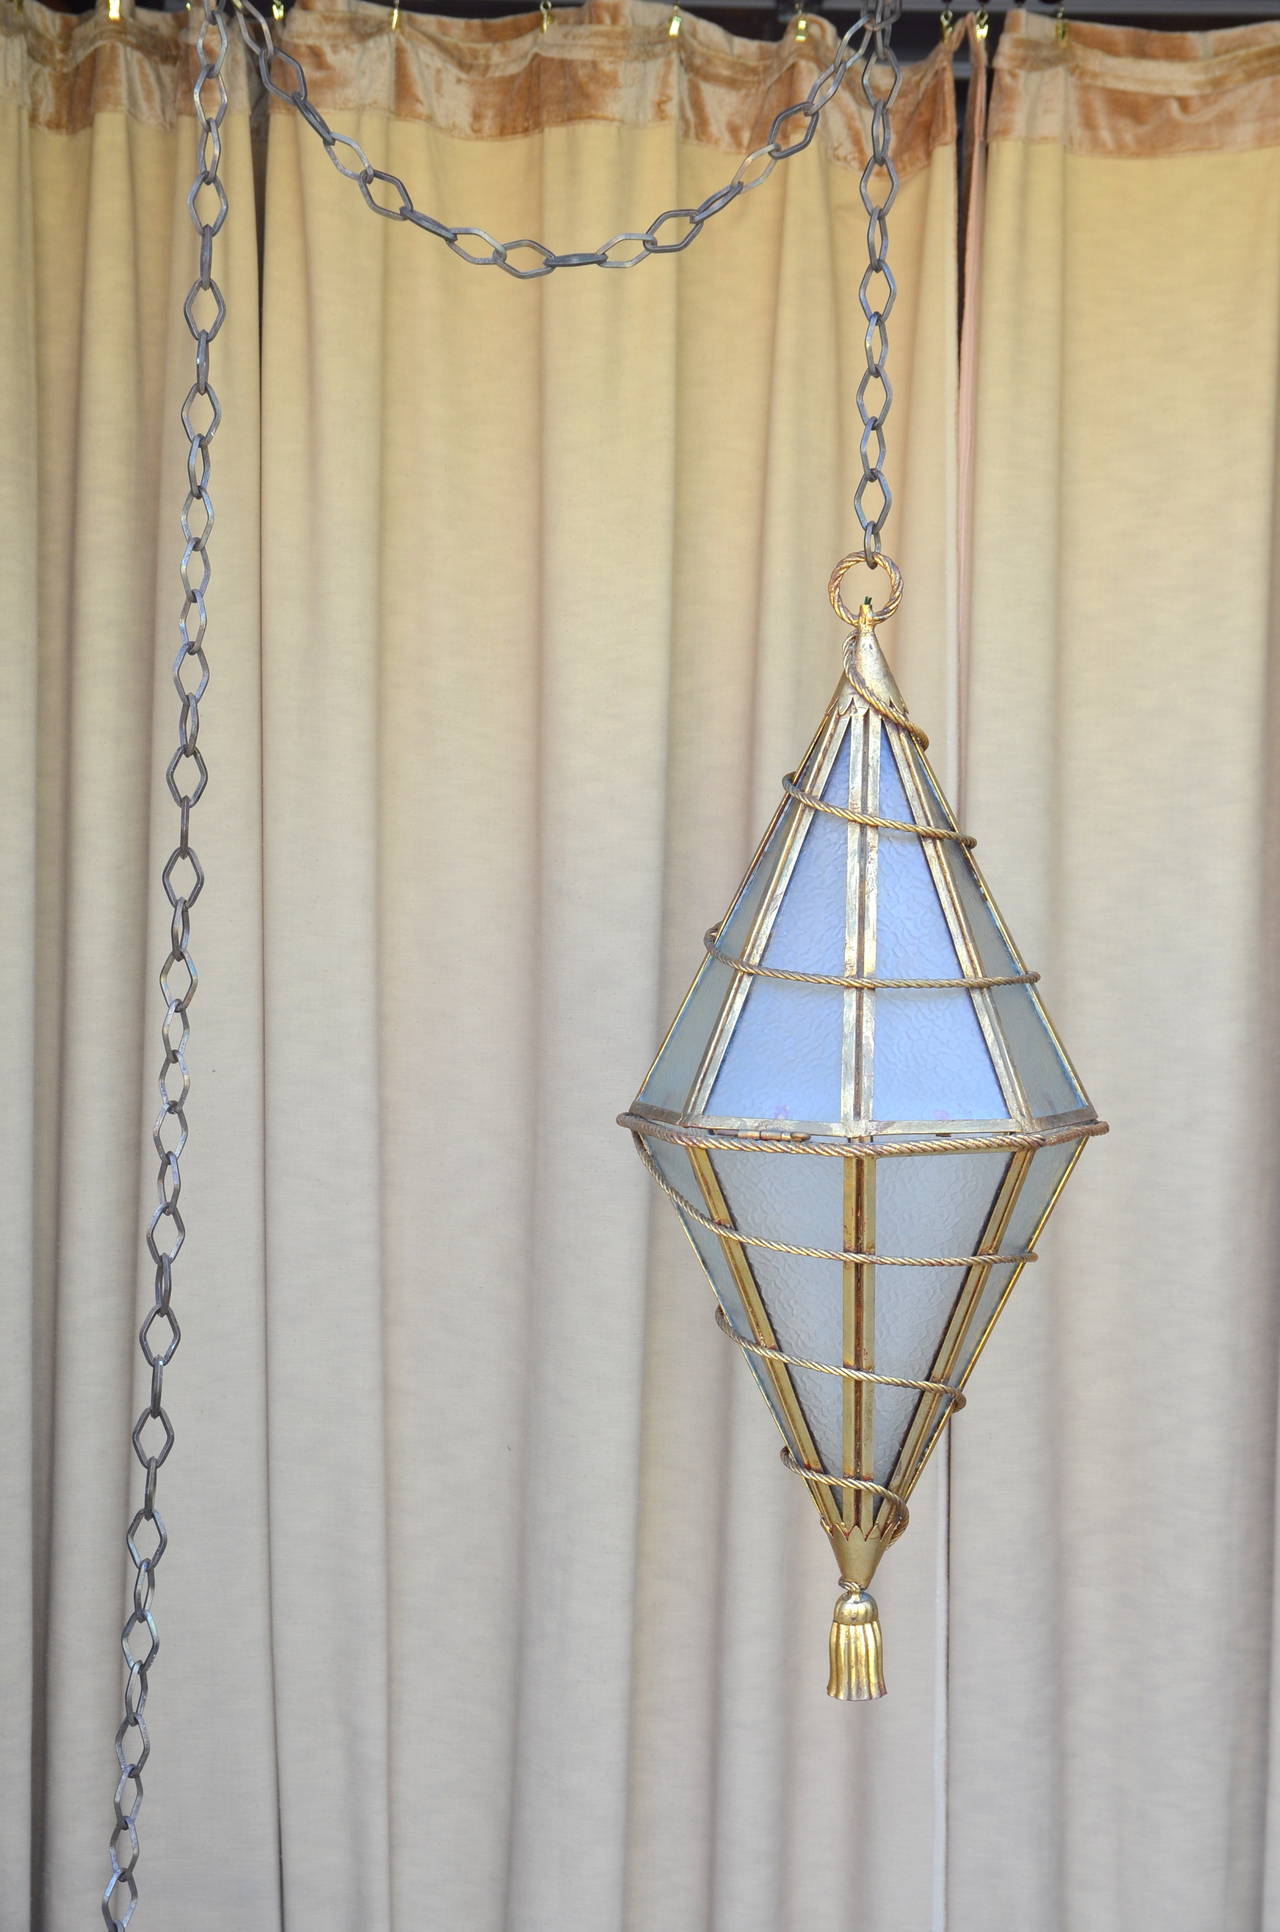 Spectacular Italian gilt metal geometric hanging lantern. Comes with extra-long (12 feet) custom chain.